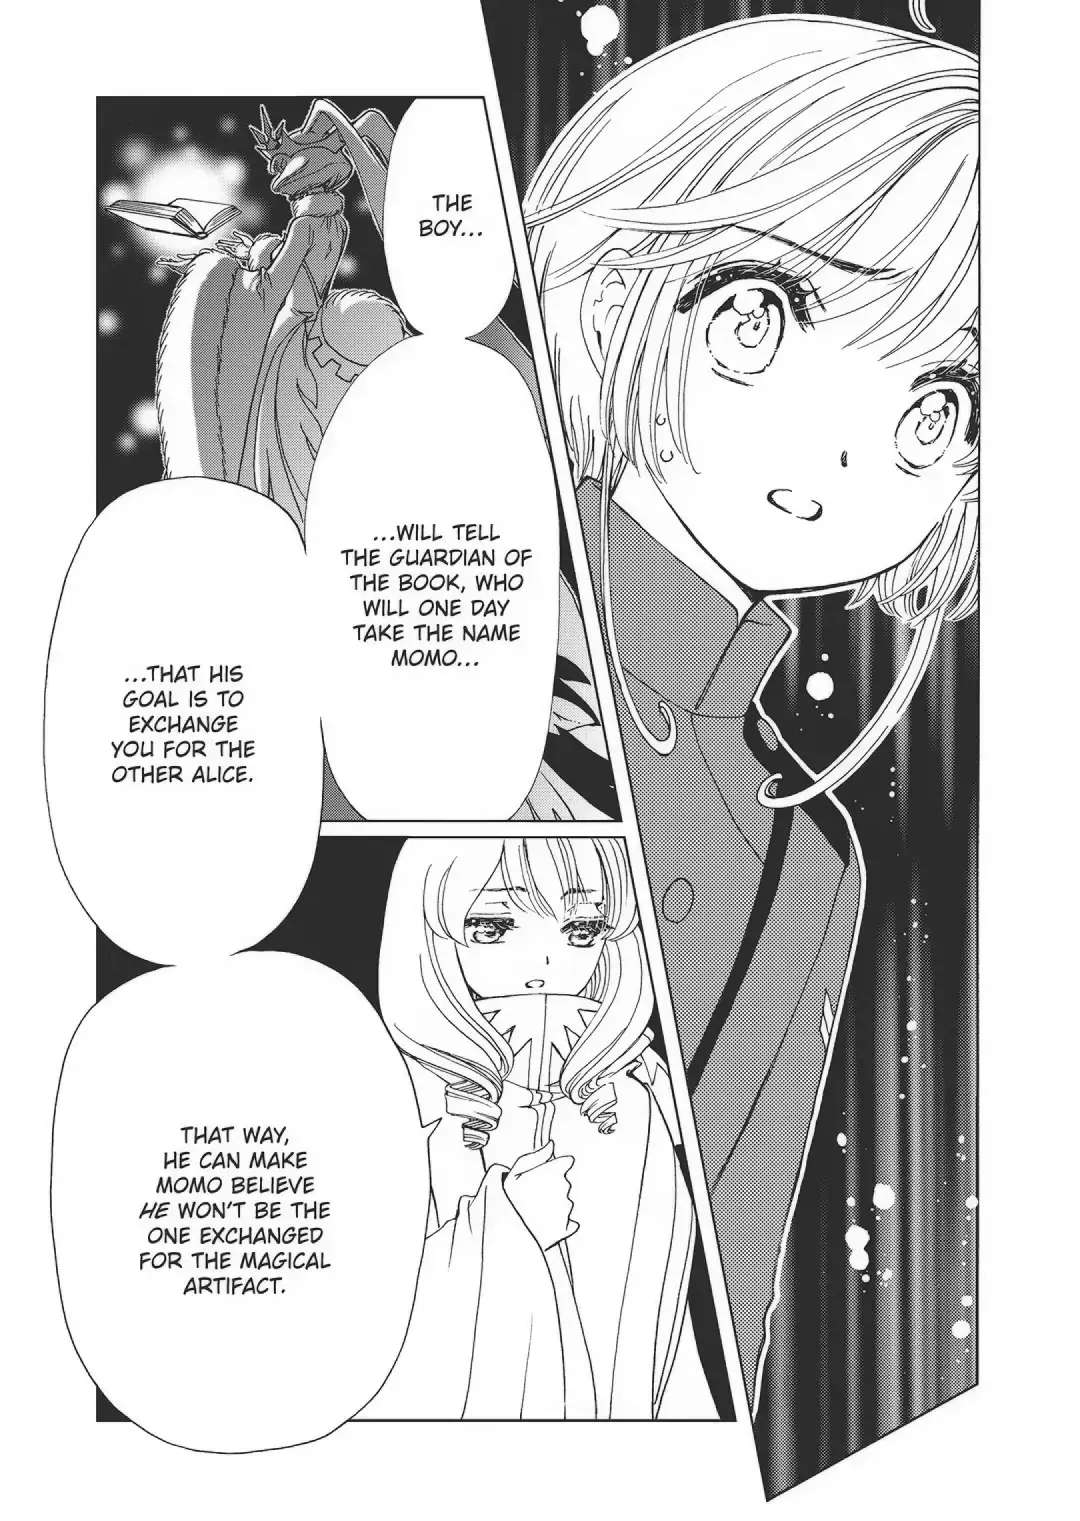 Read Cardcaptor Sakura - Clear Card Arc Chapter 50 - Manganelo